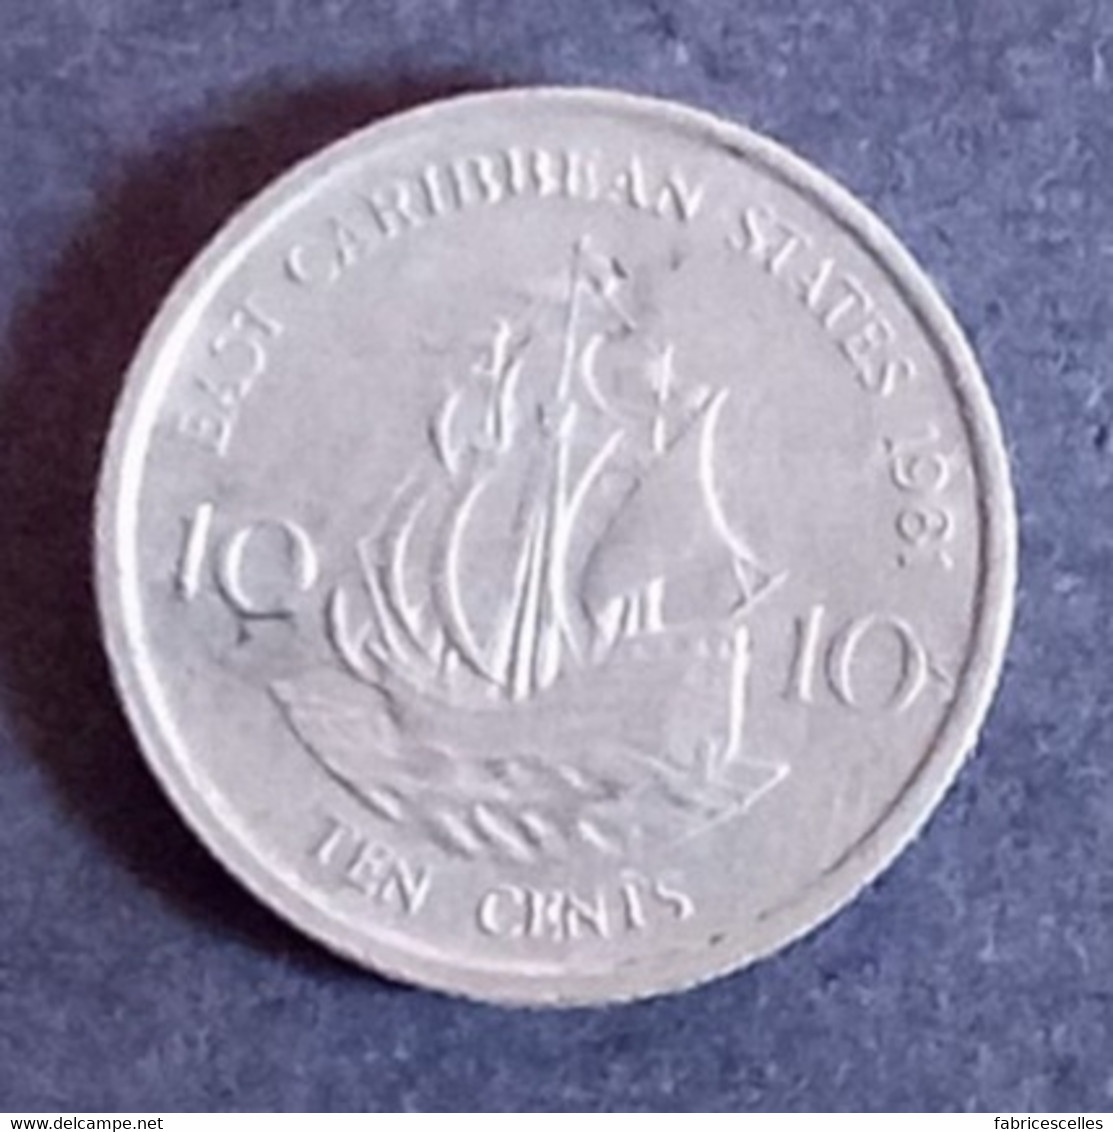 Territoires Britanniques Des Caraïbes - 10 Cents 1981 - Caribe Británica (Territorios Del)